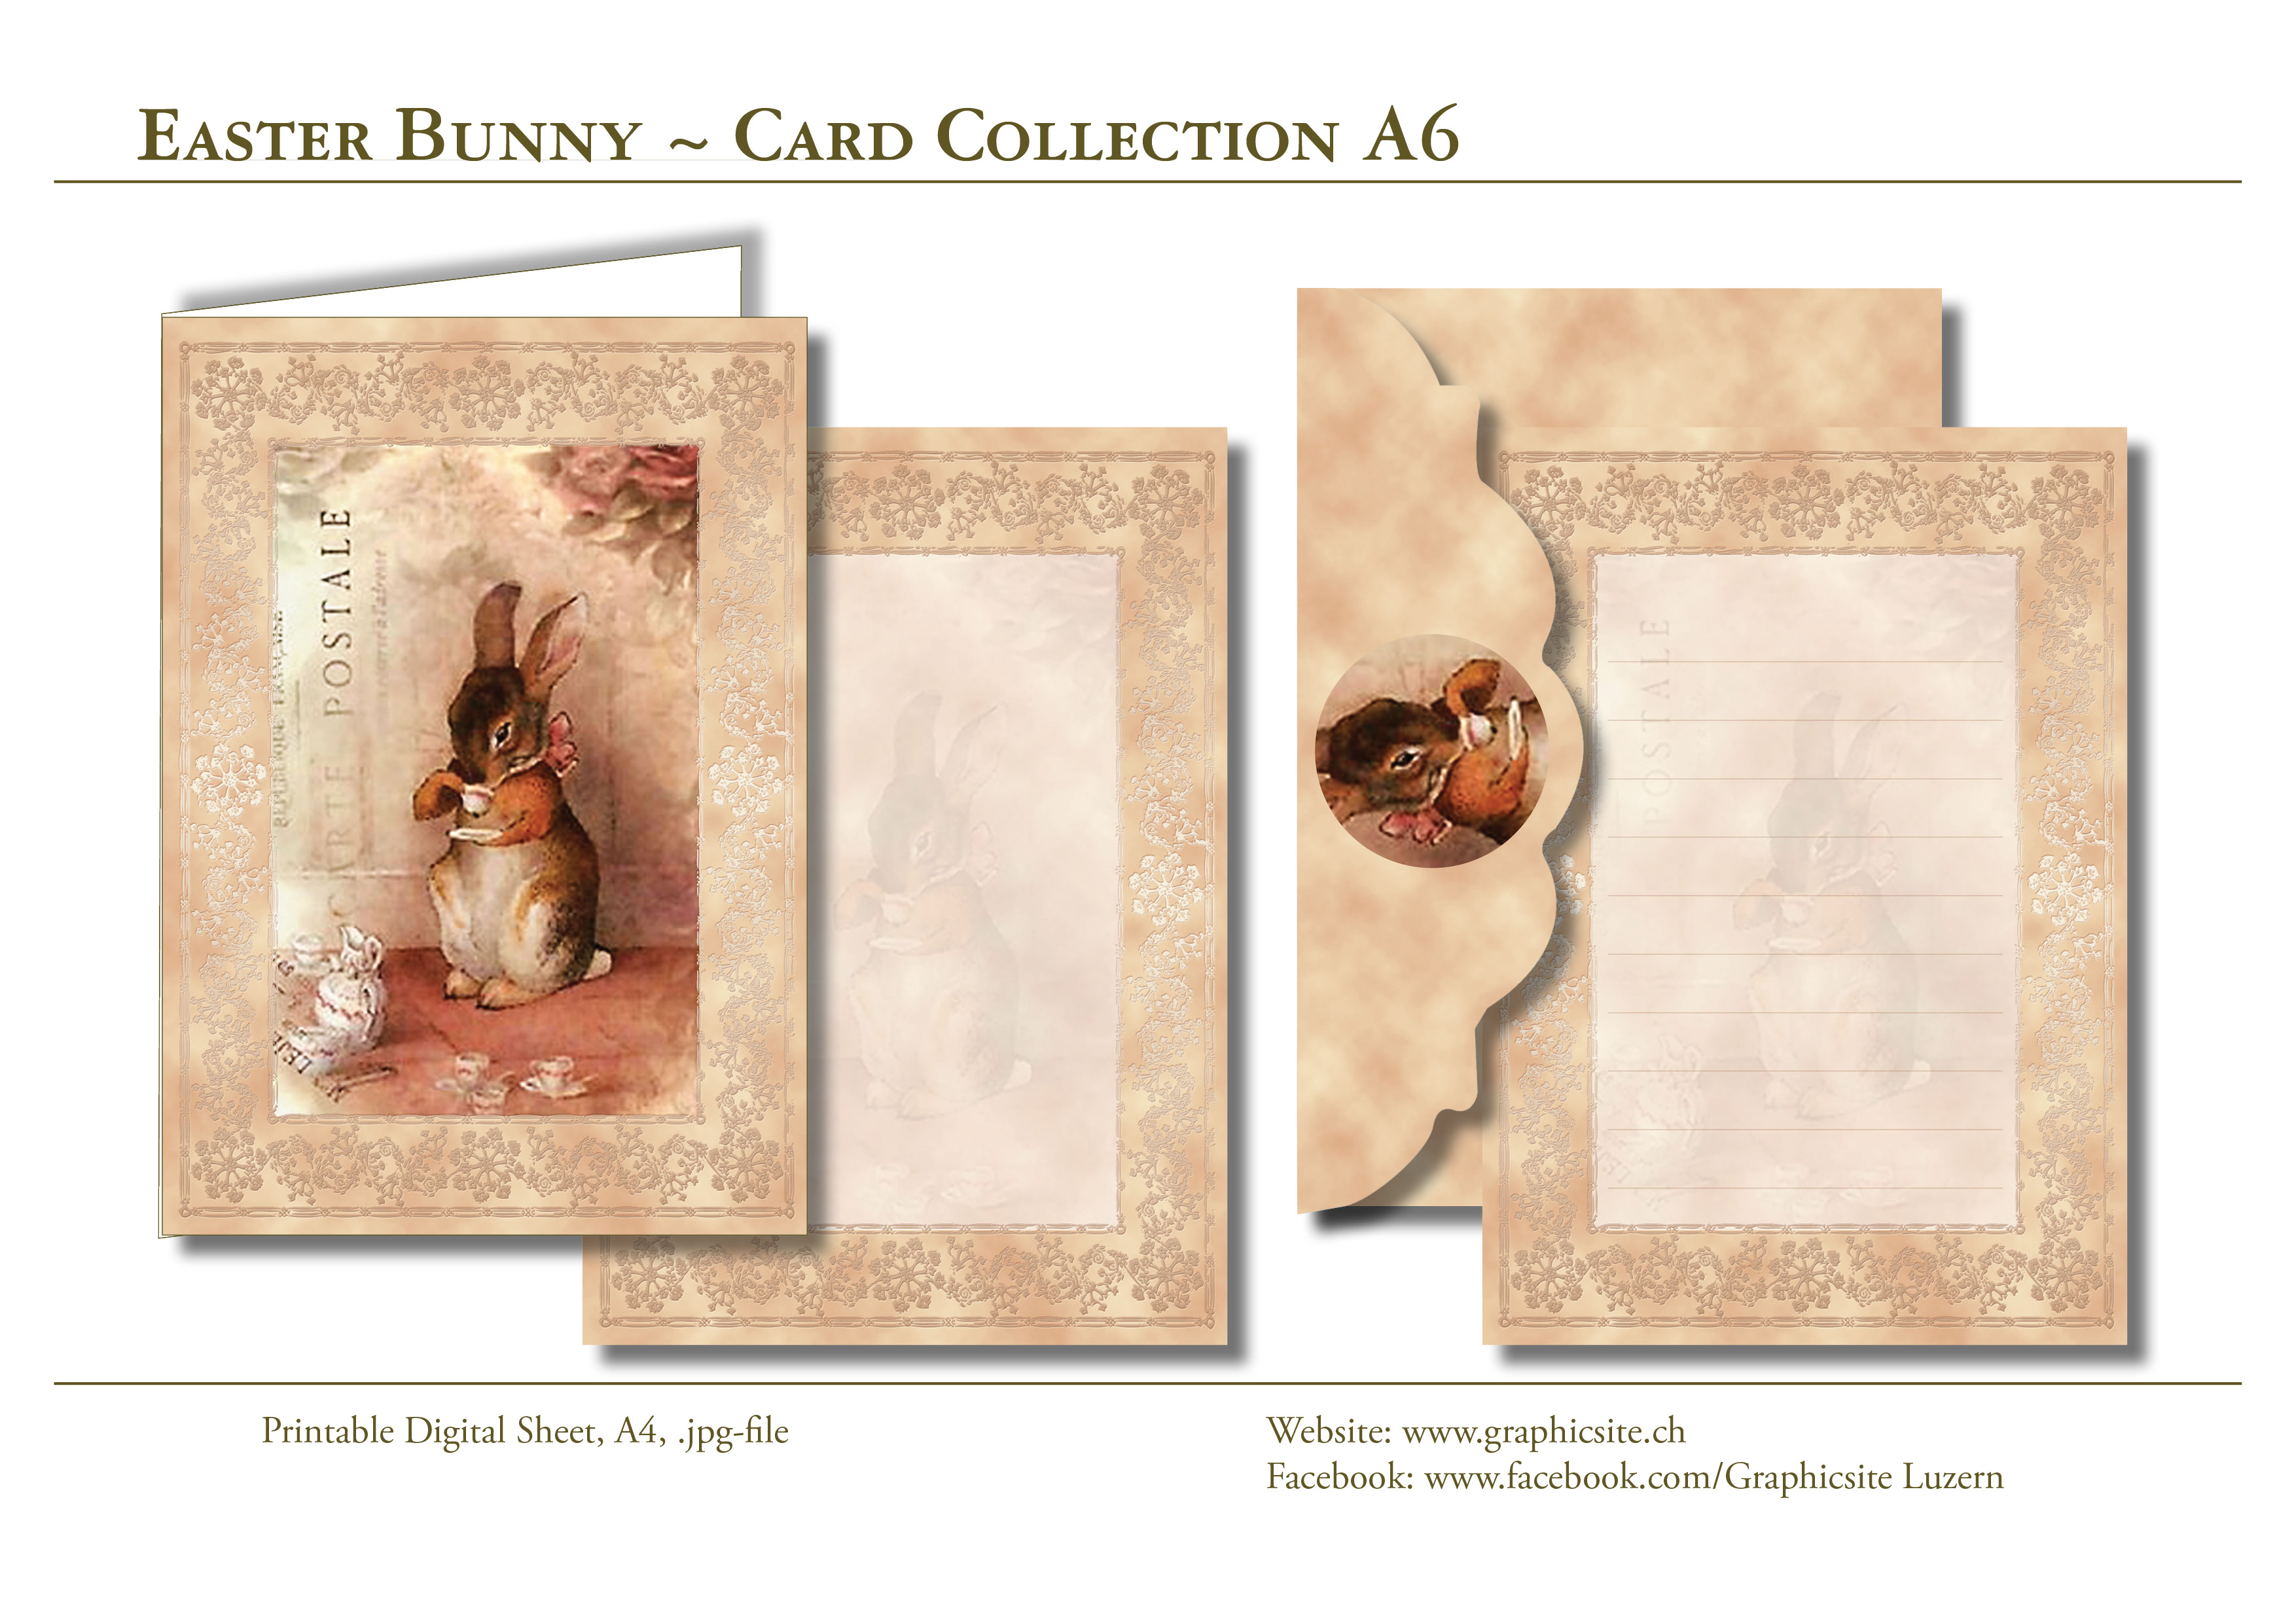 Printable Digital Sheets, Cardmaking, Scrapbooking, Easter, Bunny, Vintage, Greeting Cards, Postcards, Notecards,